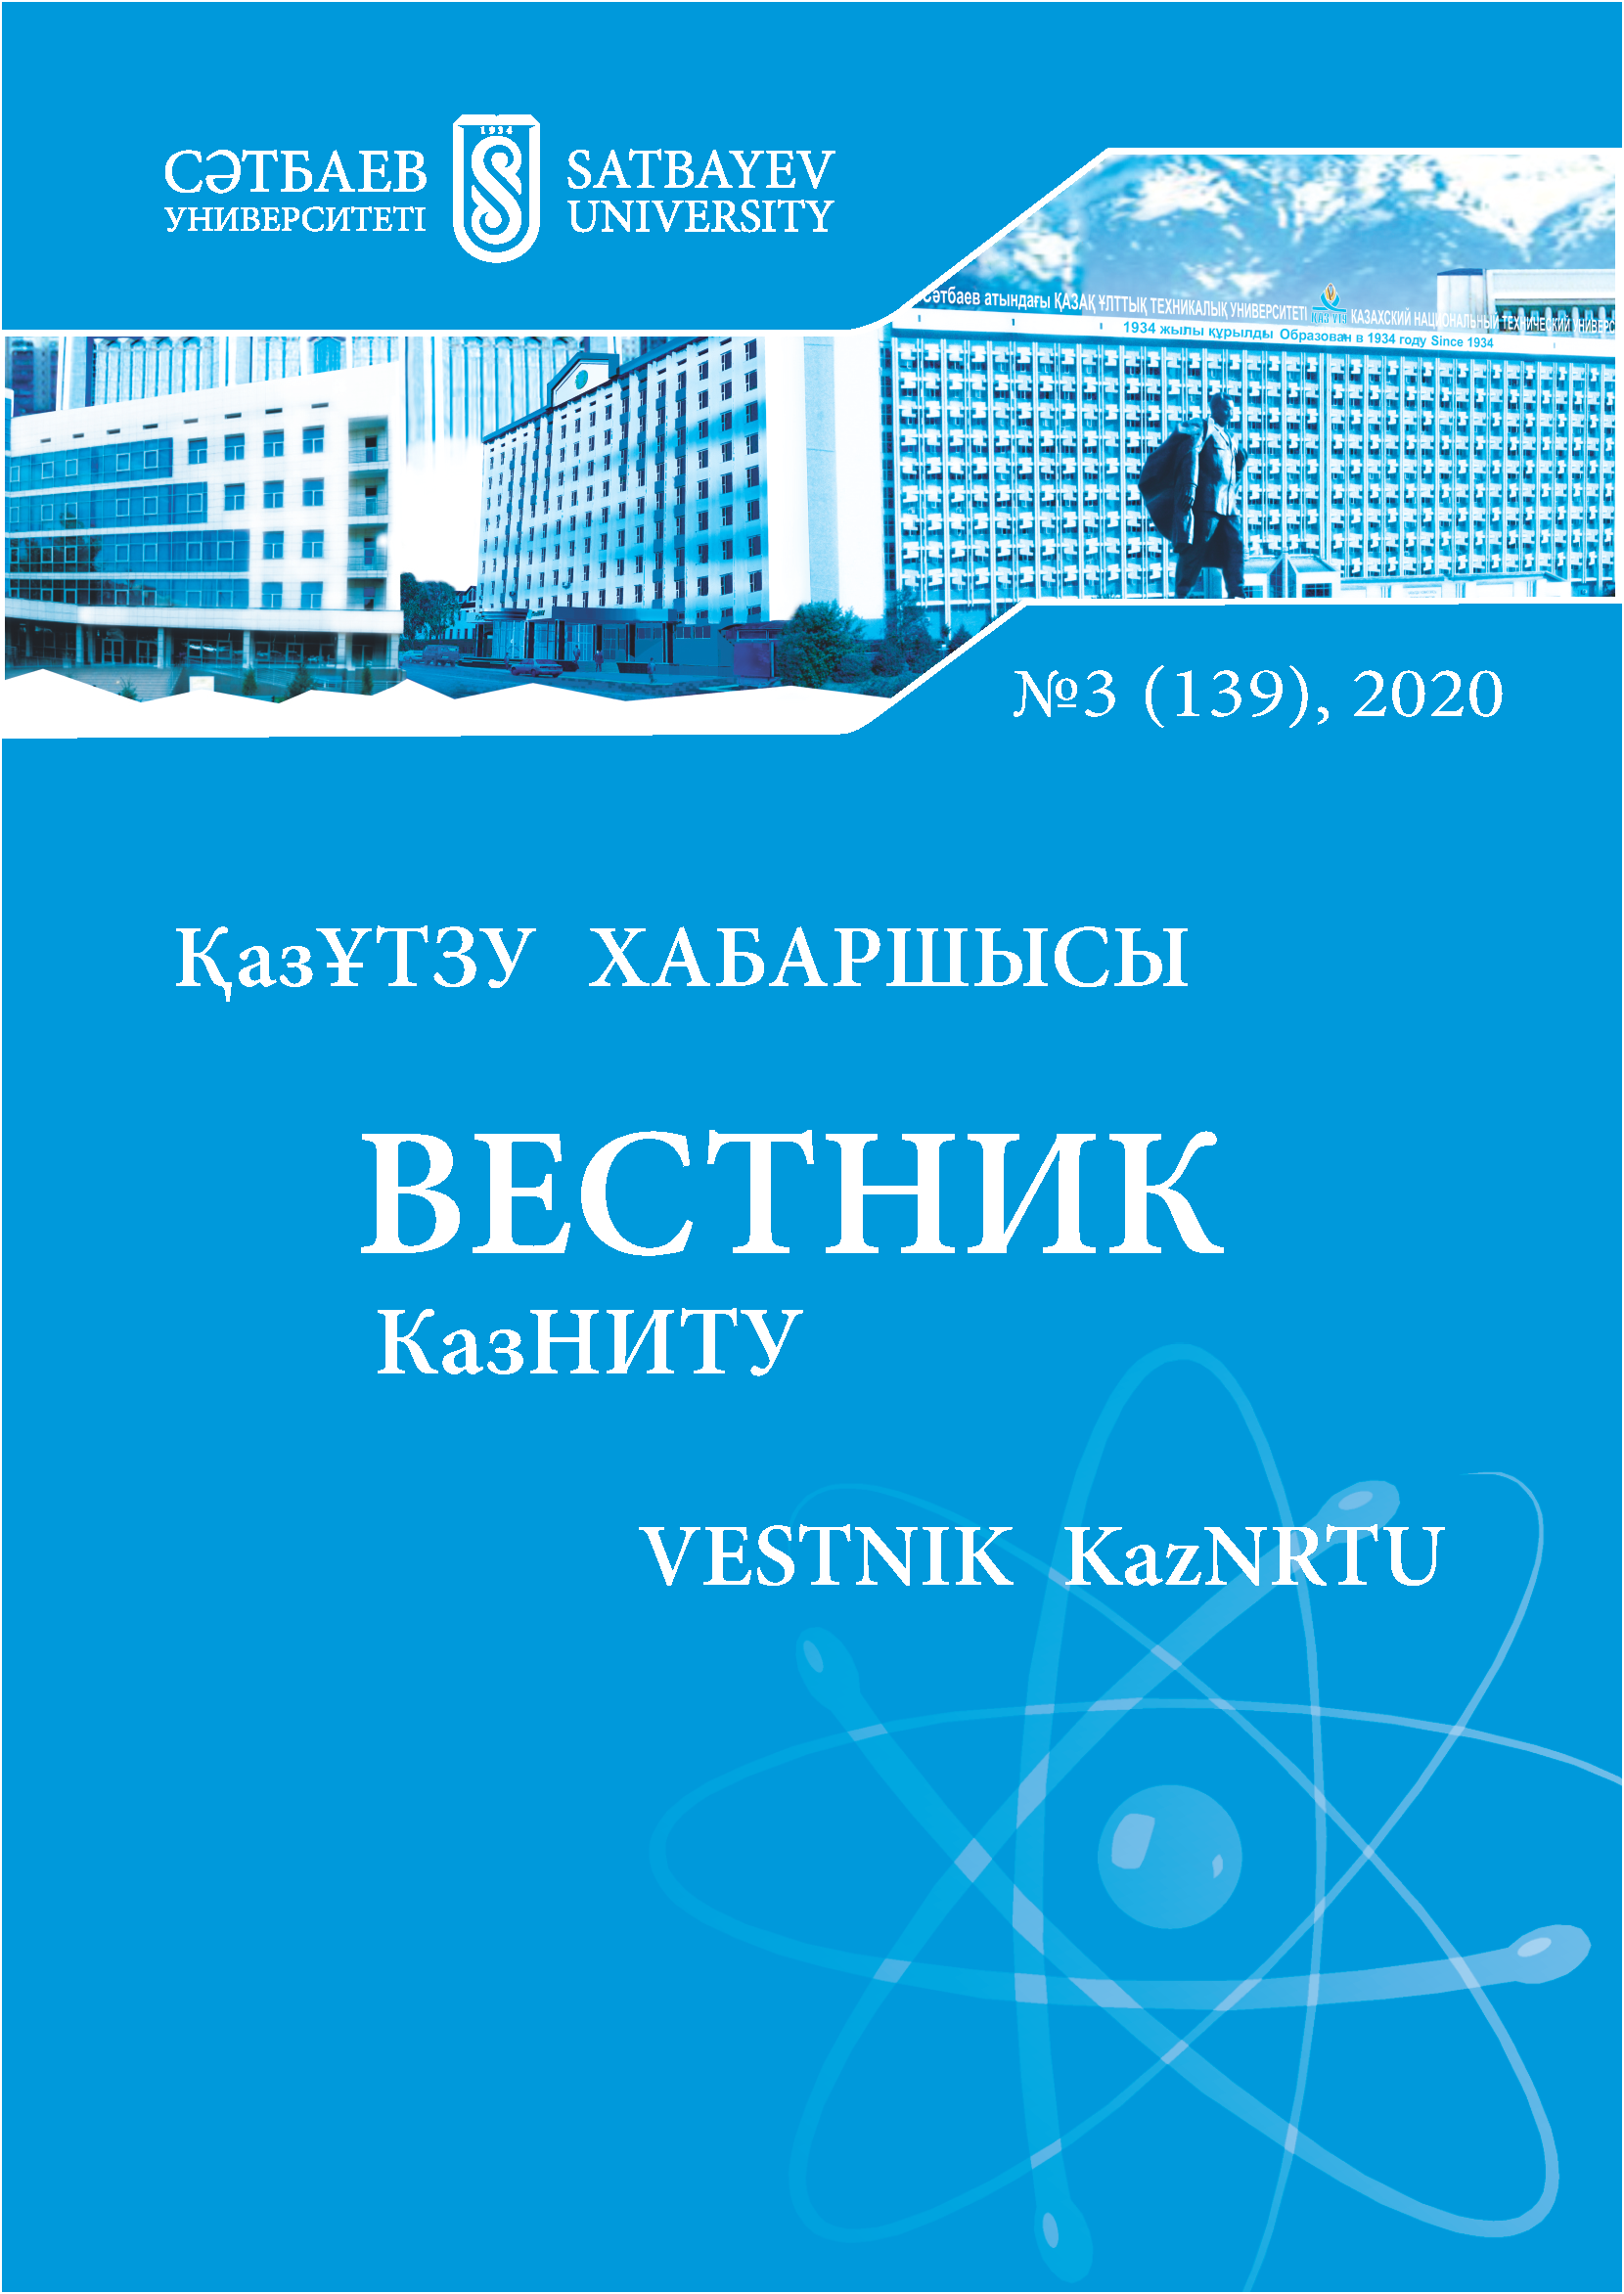 					View Vol. 139 No. 3 (2020): Vestnik KazNRTU
				